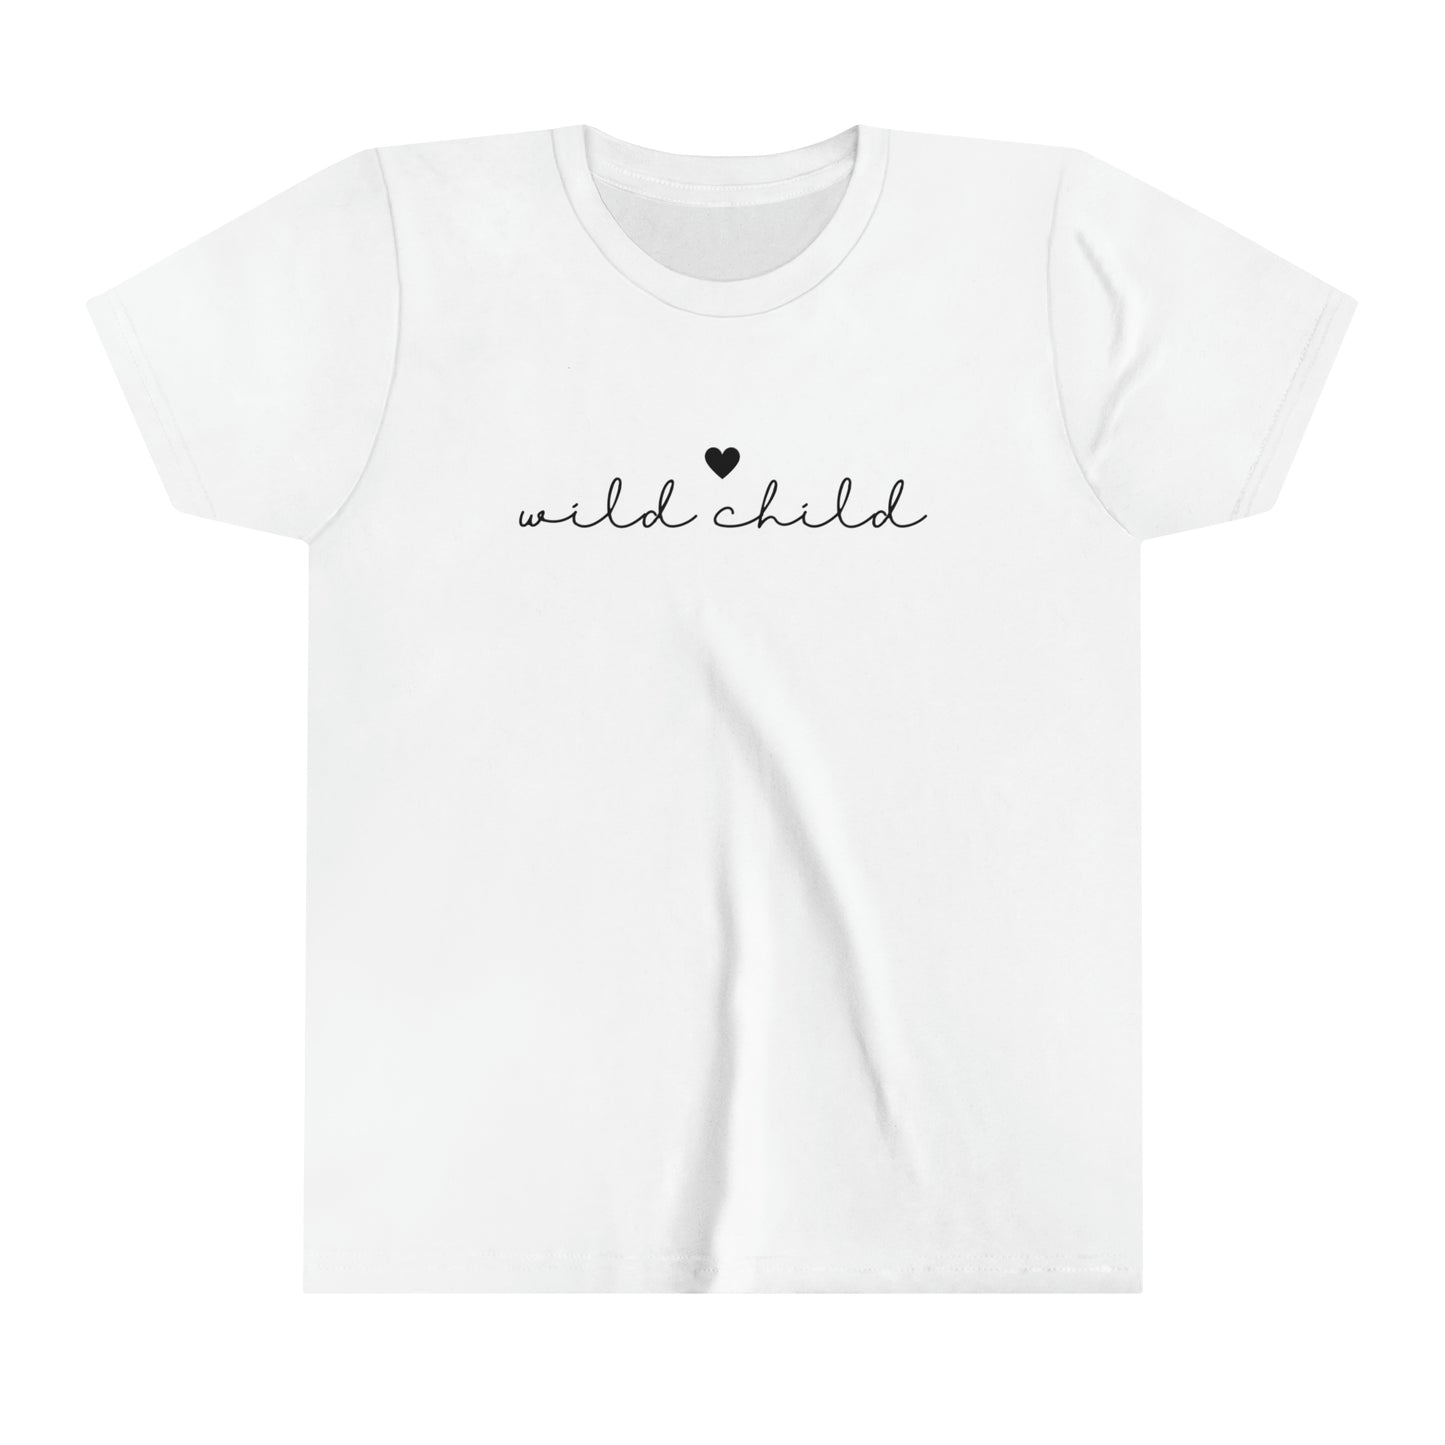 Wild Child "Mini Me" Youth T-Shirt